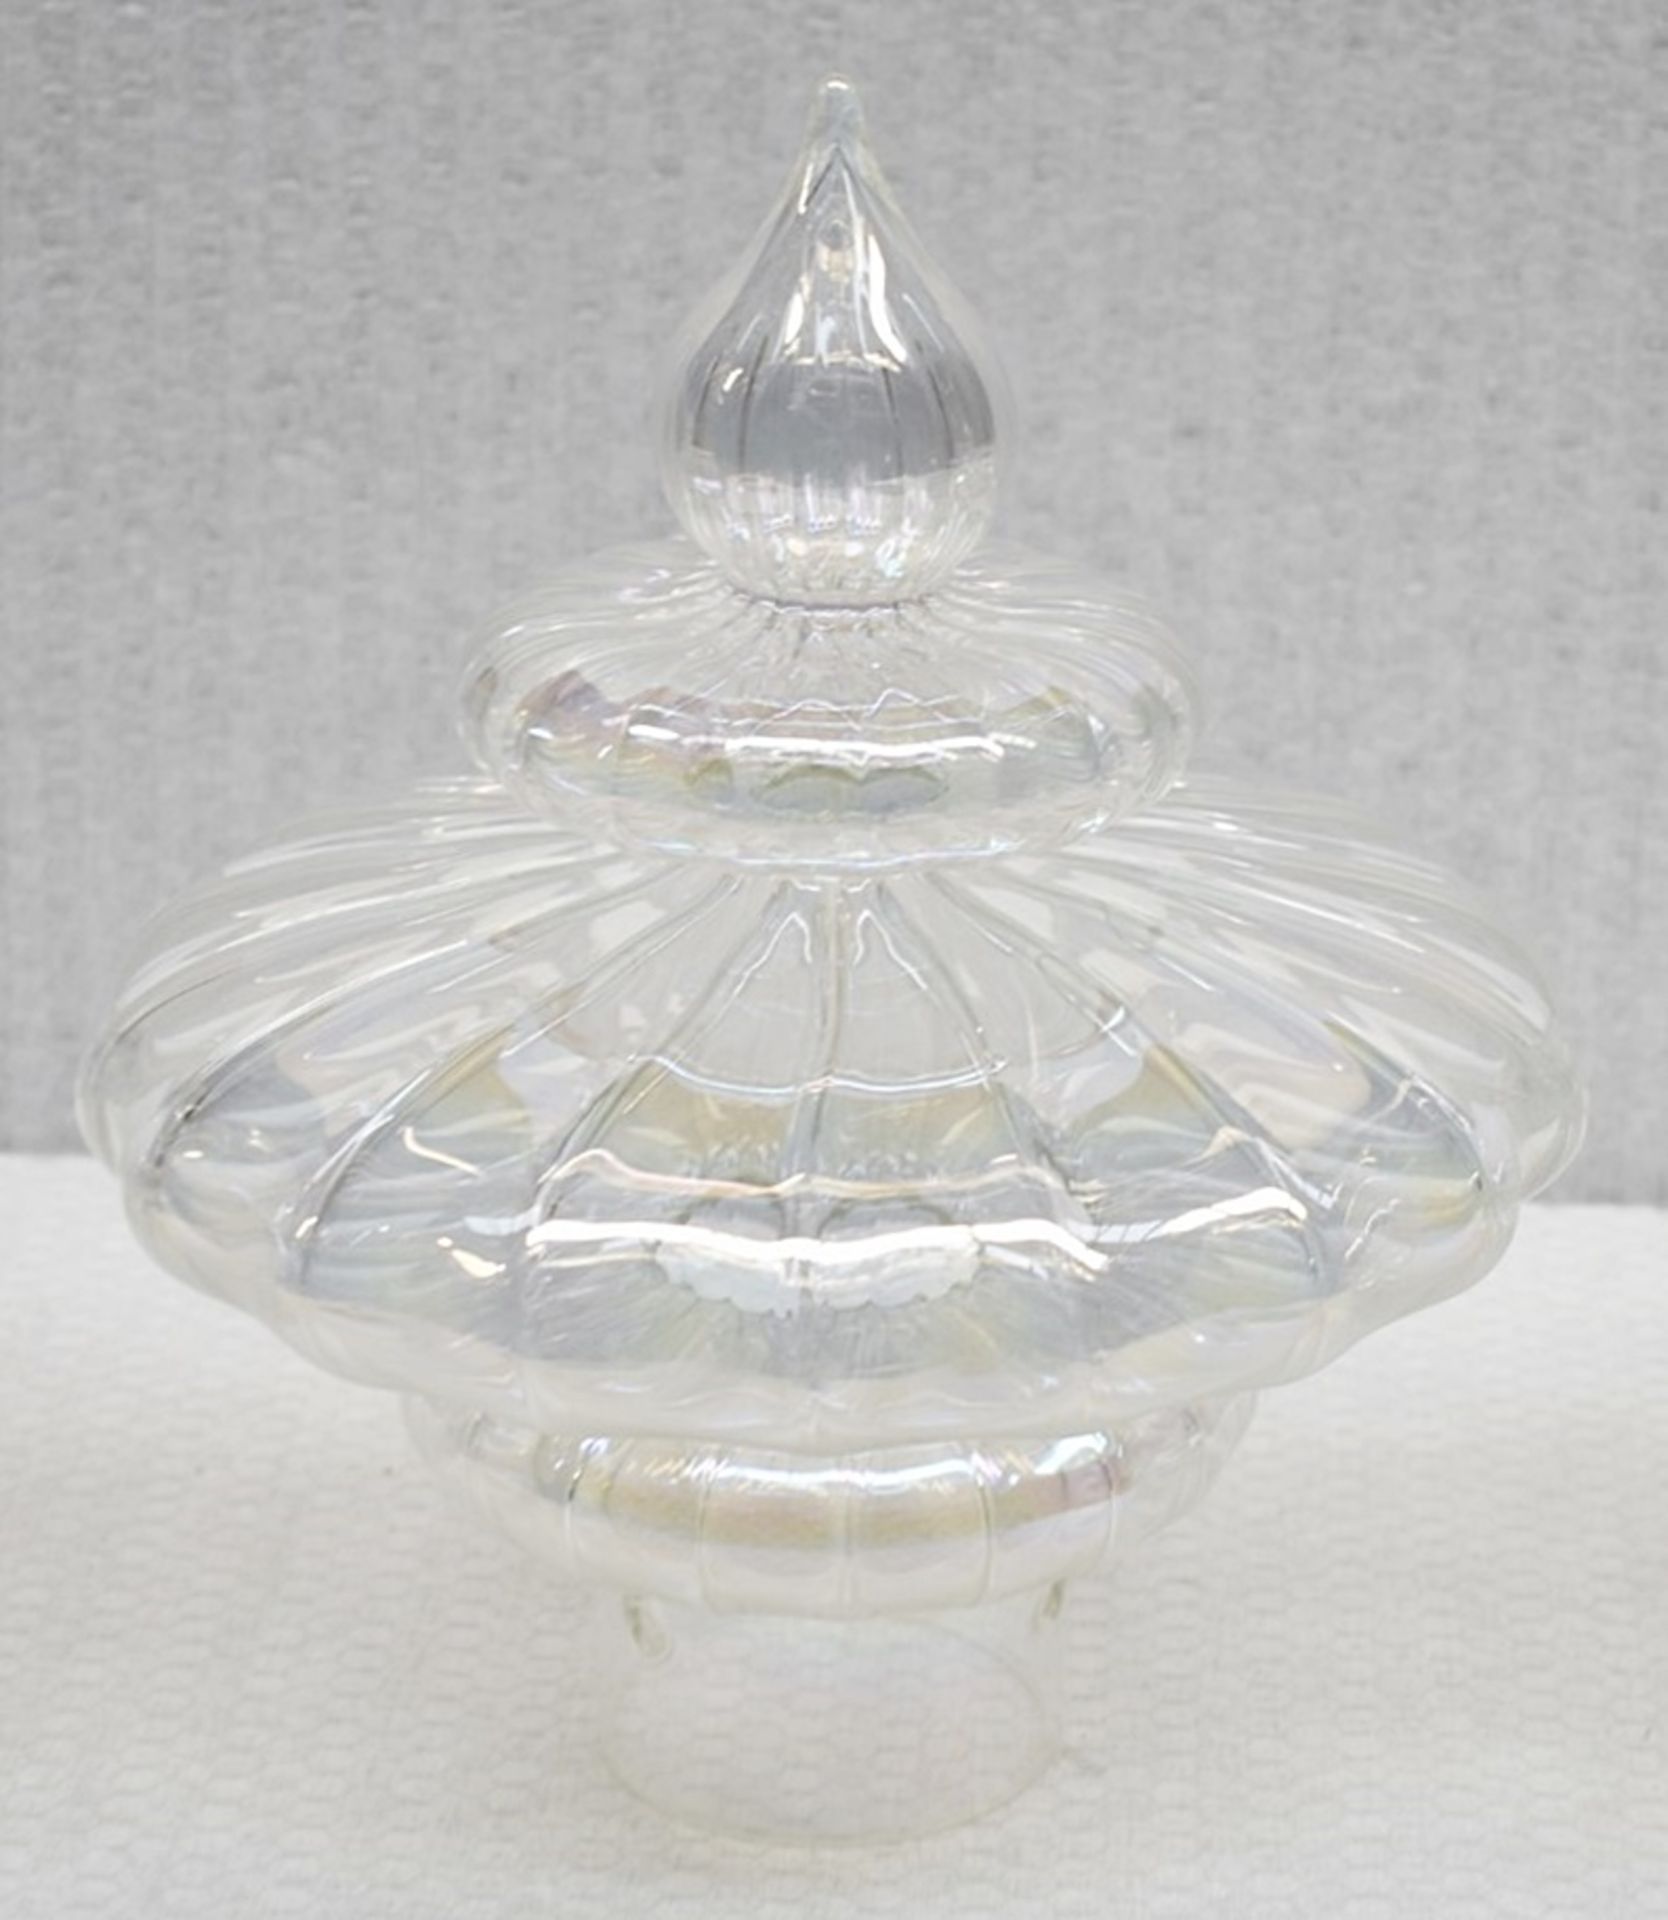 1 x HEATHFIELD & CO Luxury 'Basilca' Triple Pendant Light In Polished Nickel, With Fluted Artisan - Image 11 of 17